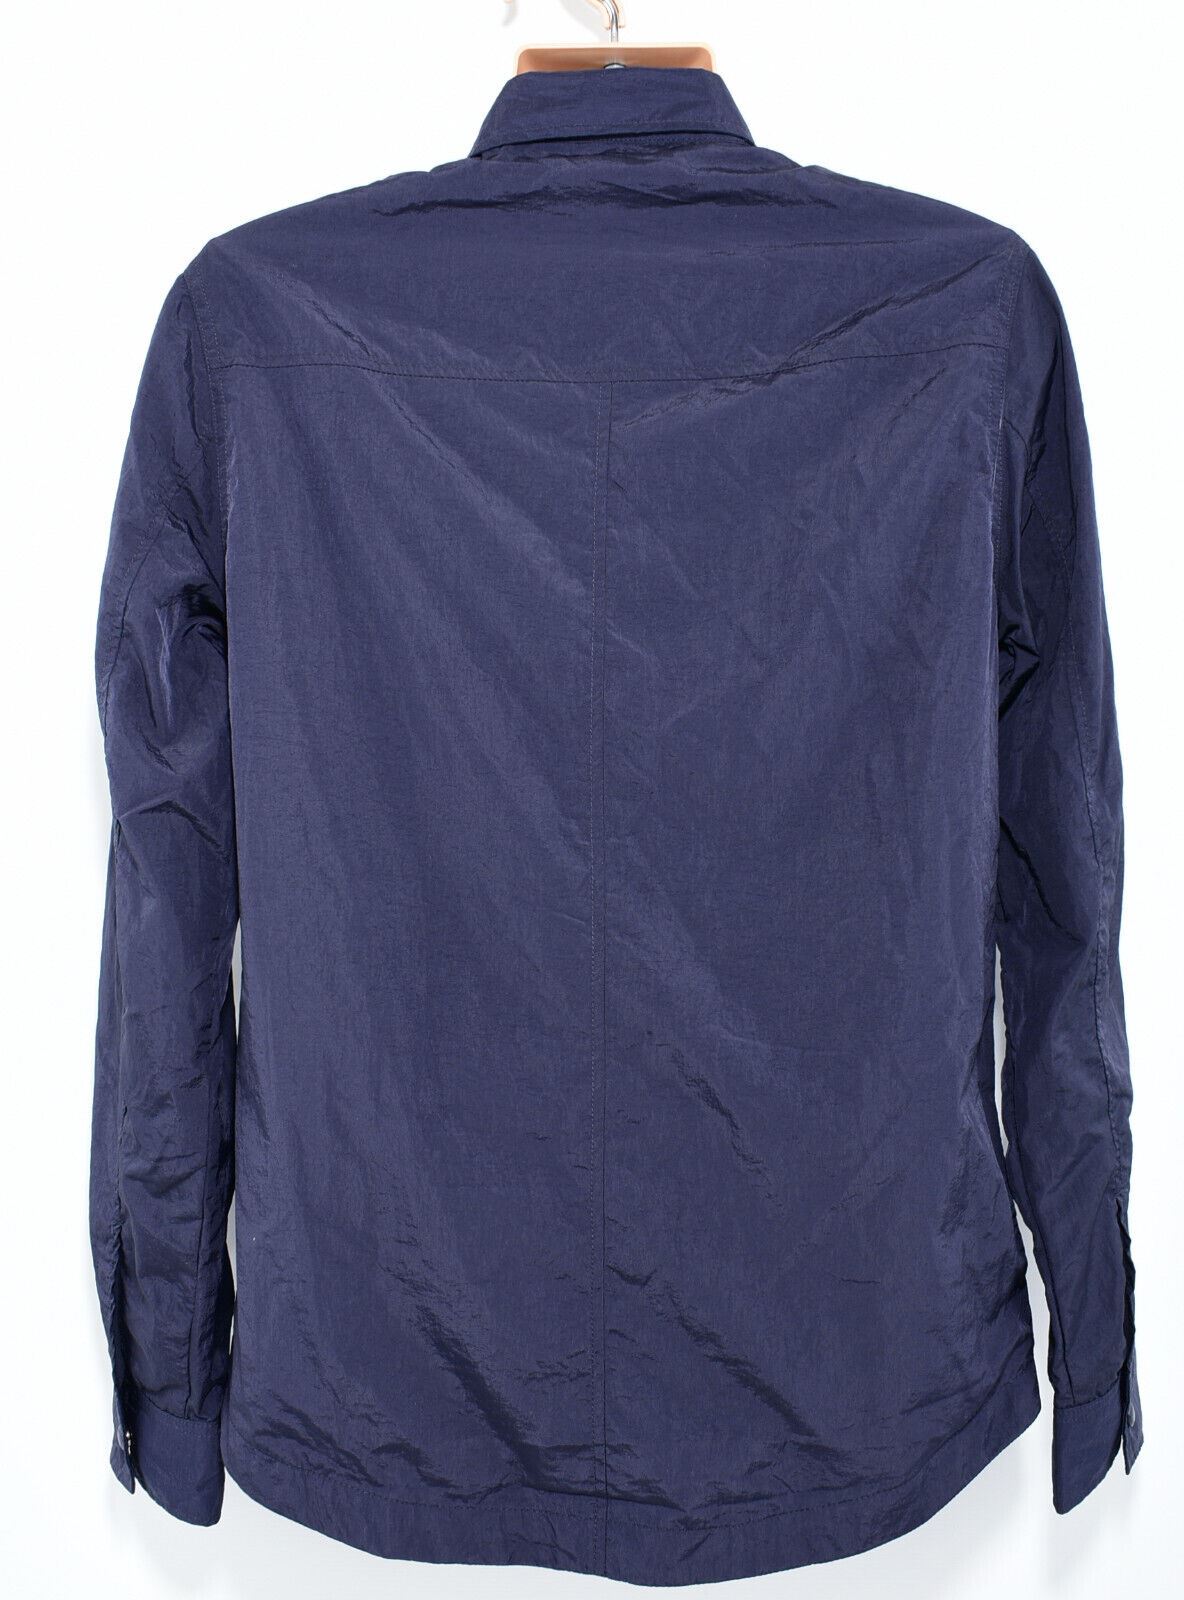 FIRETRAP BLACKSEAL Men's Shacket, Zip Shirt Jacket, Navy Blue, size M